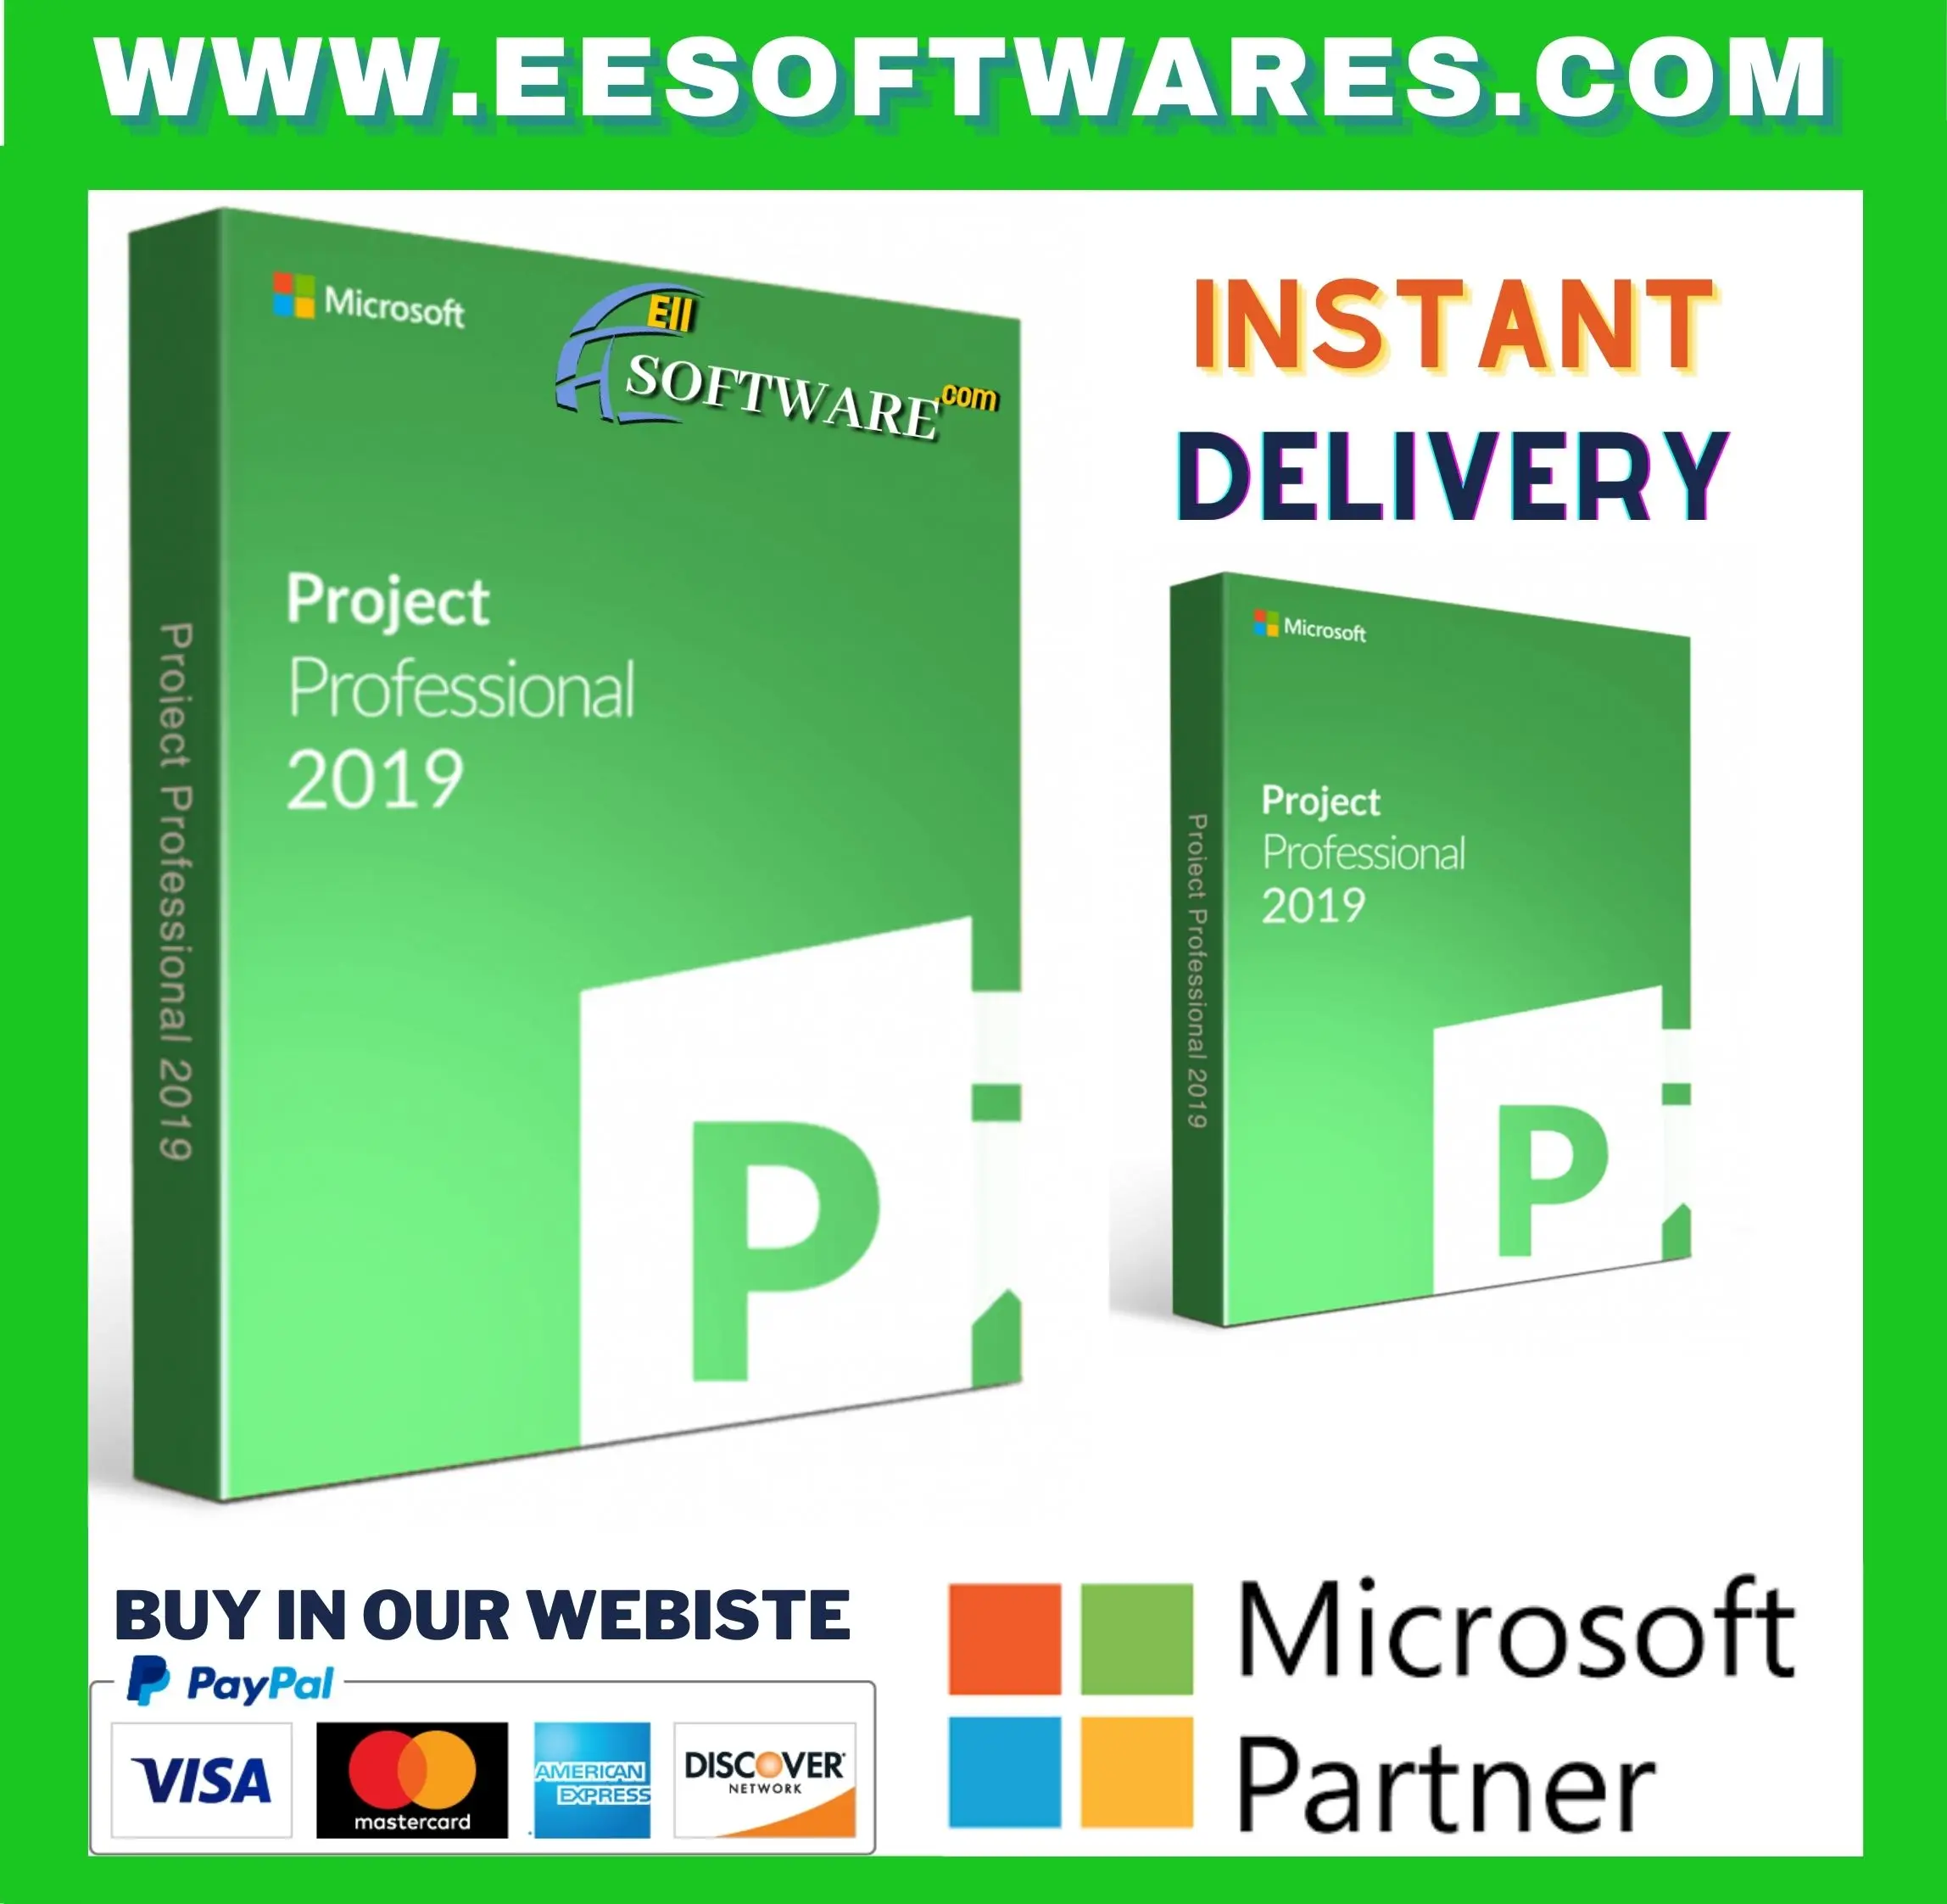 

{Microsoft Project Professional 2019 key}